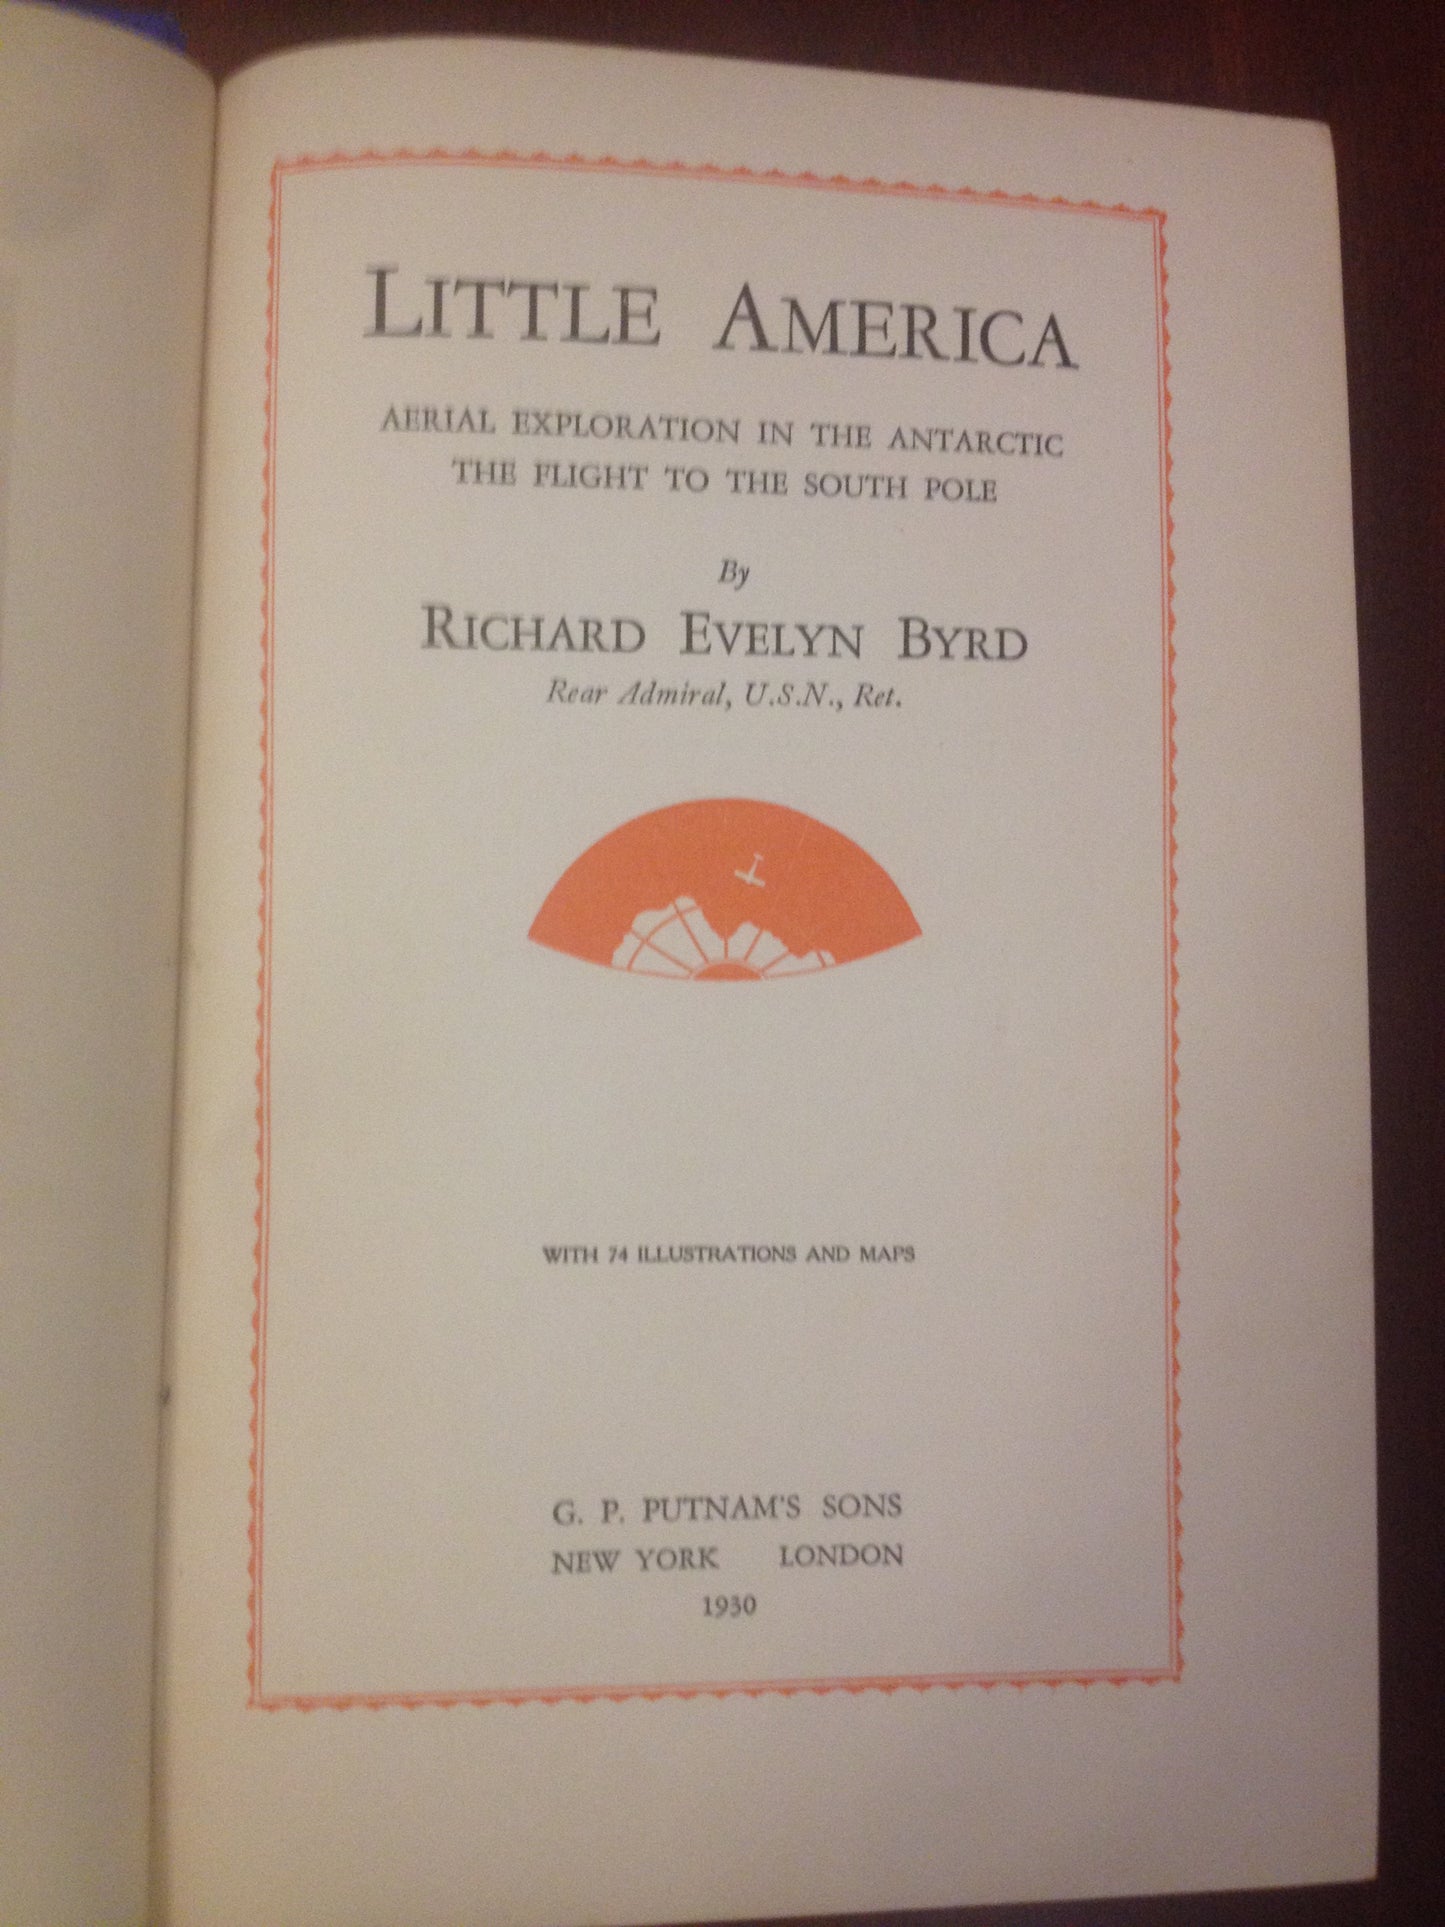 LITTLE AMERICA  - RICHARD E. BYRD